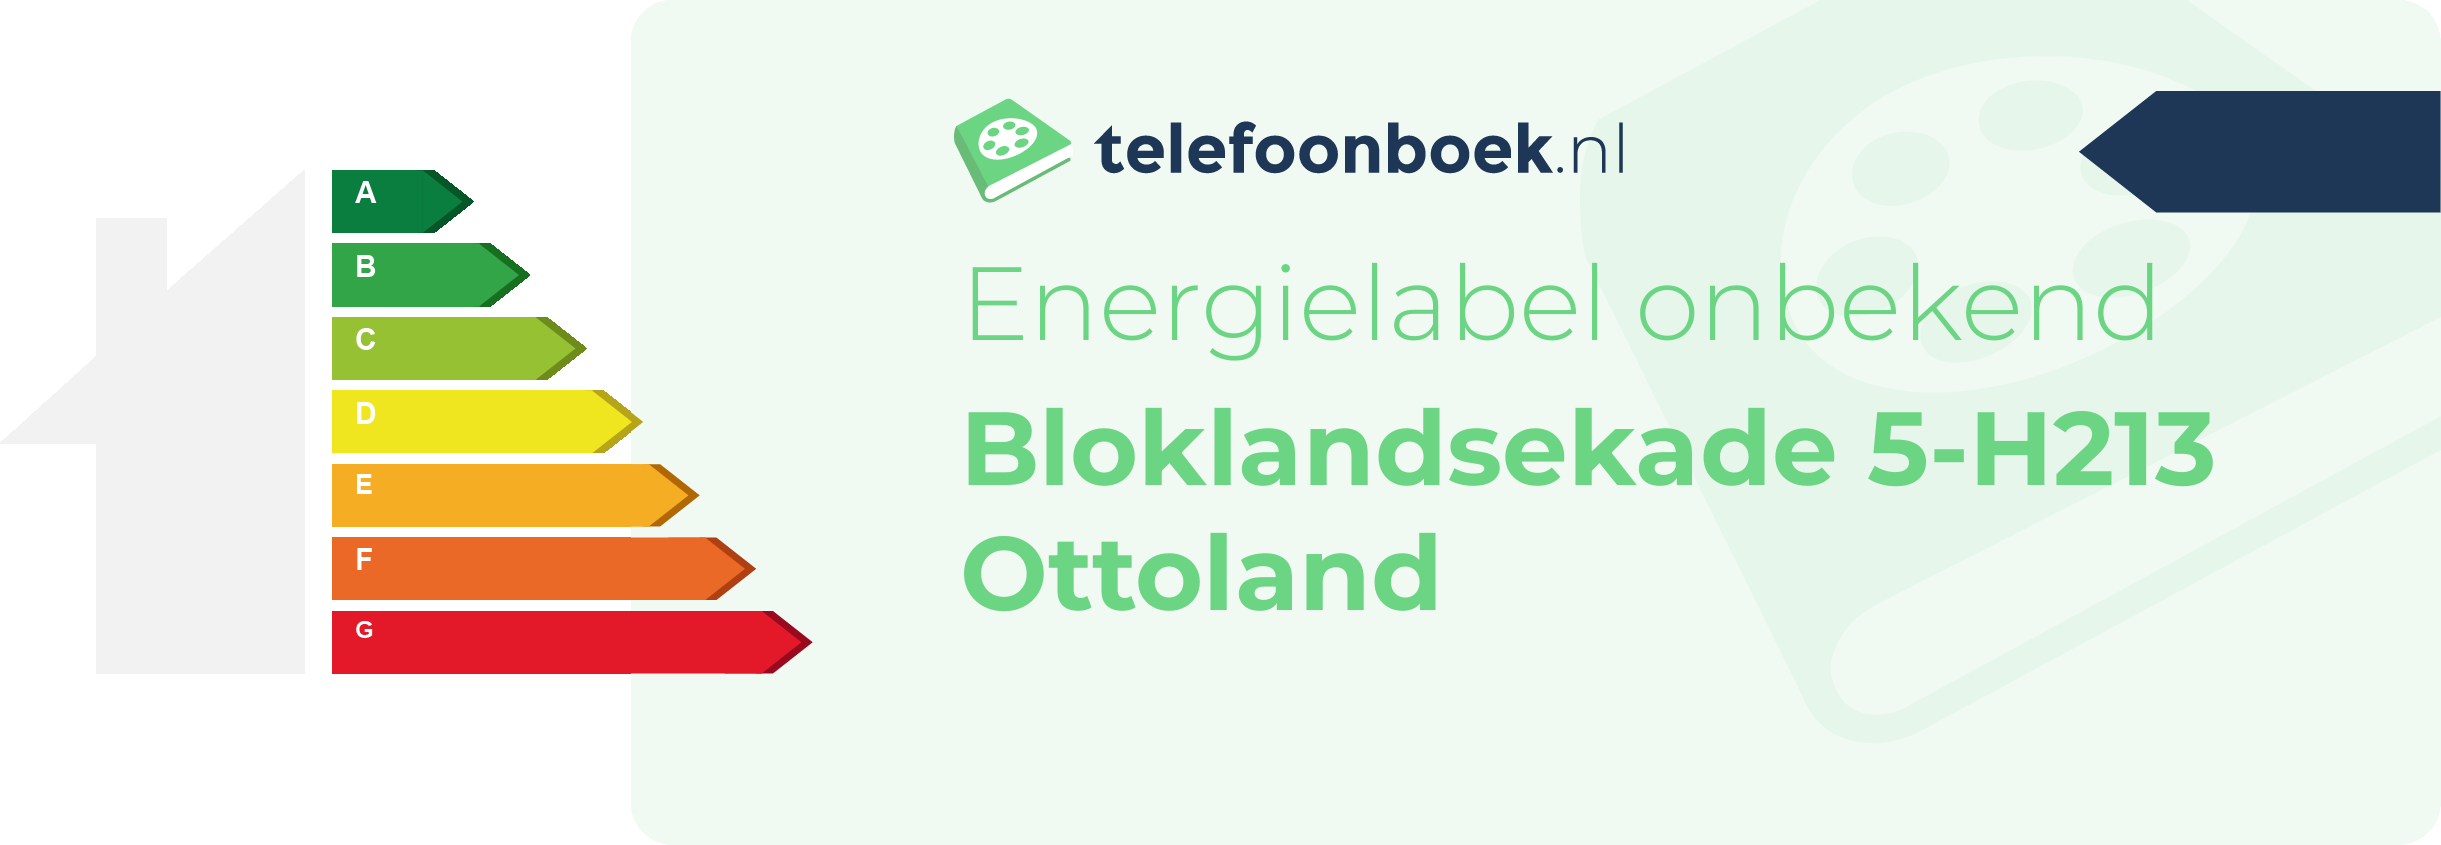 Energielabel Bloklandsekade 5-H213 Ottoland